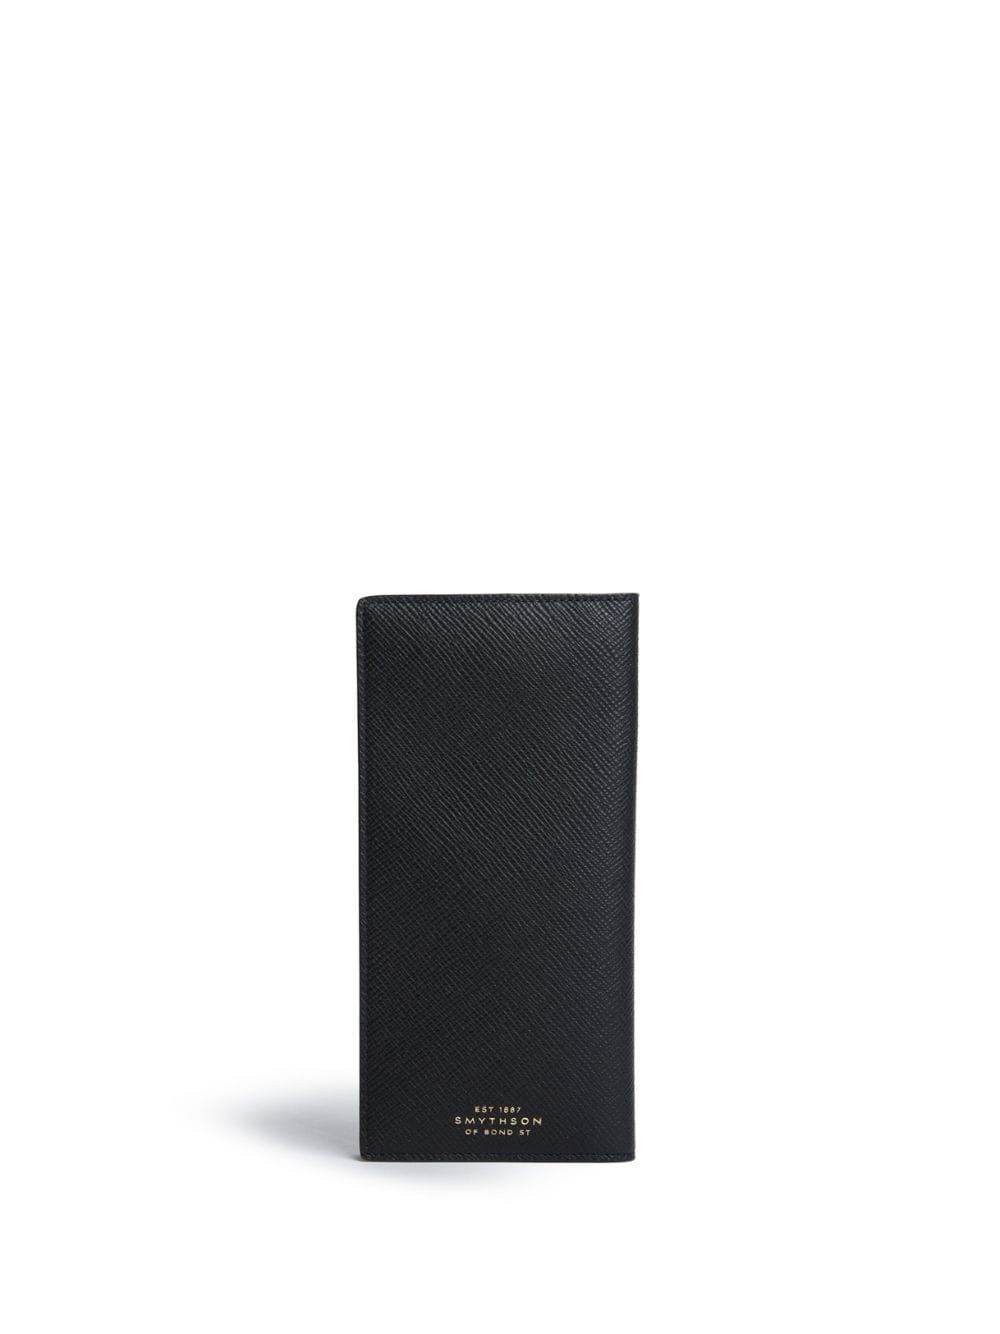 Smythson Panama slim bi-fold leather wallet - Black von Smythson